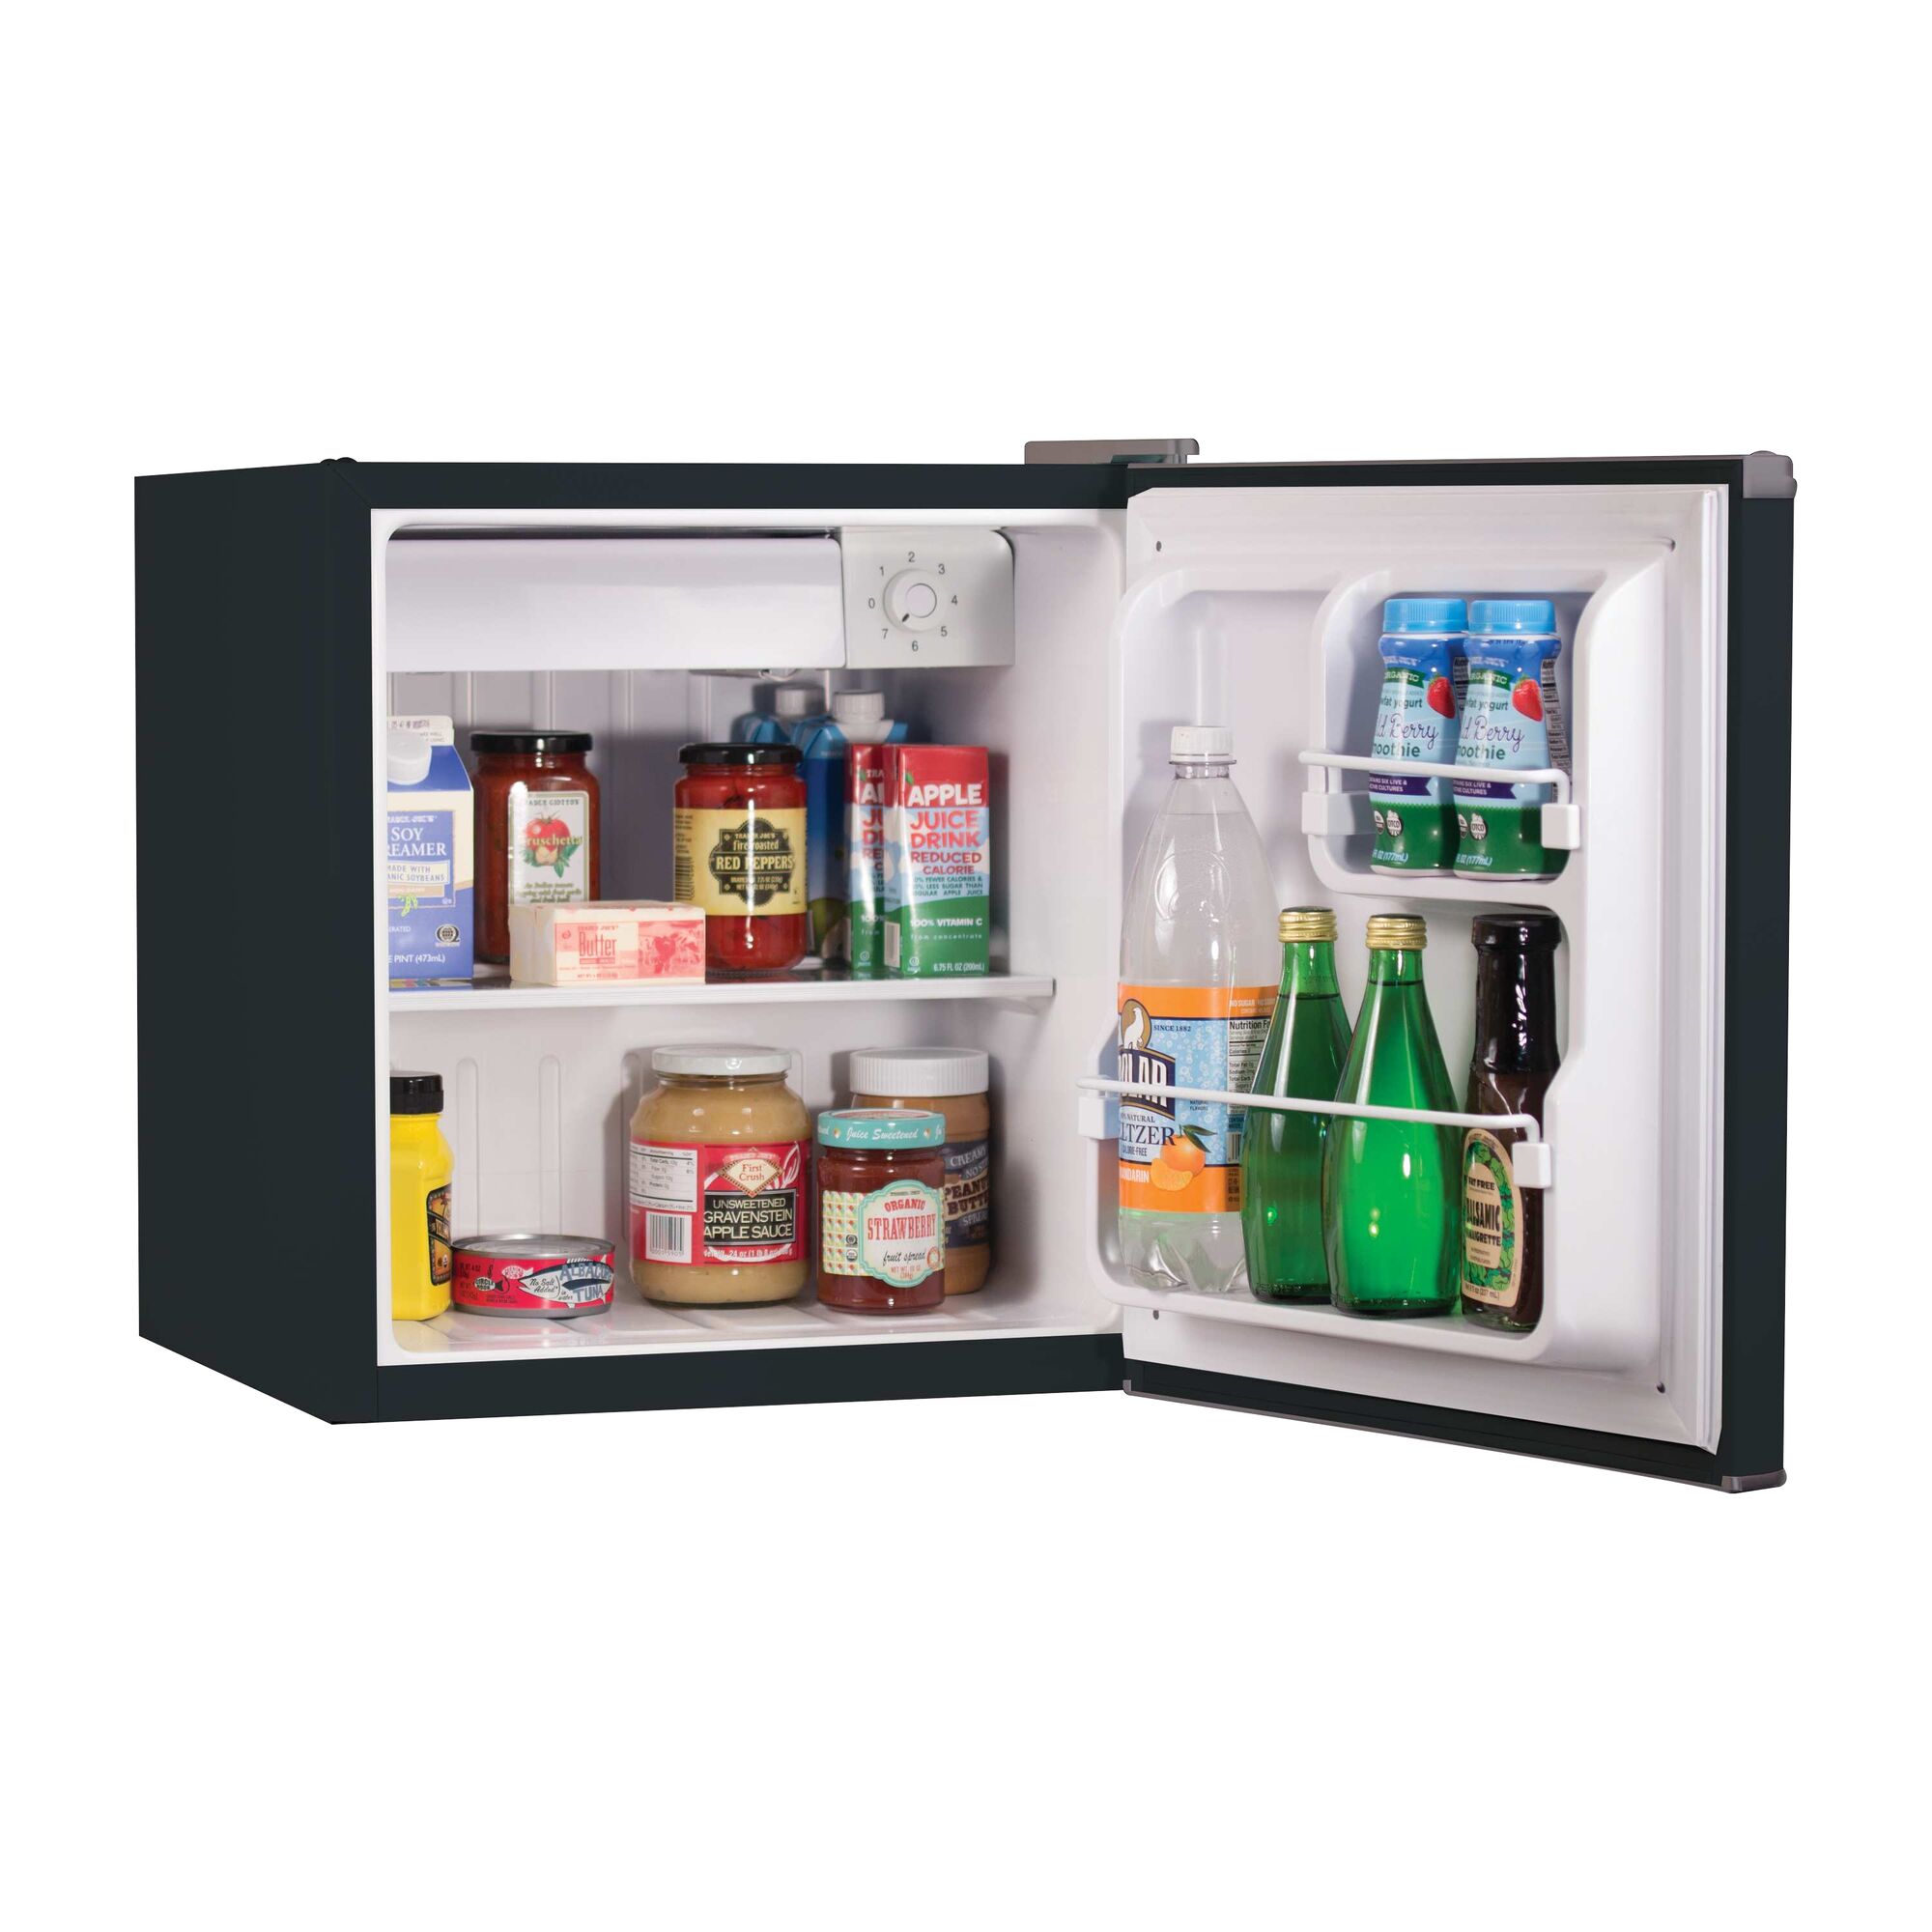 Energy star refrigerator with freezer black.